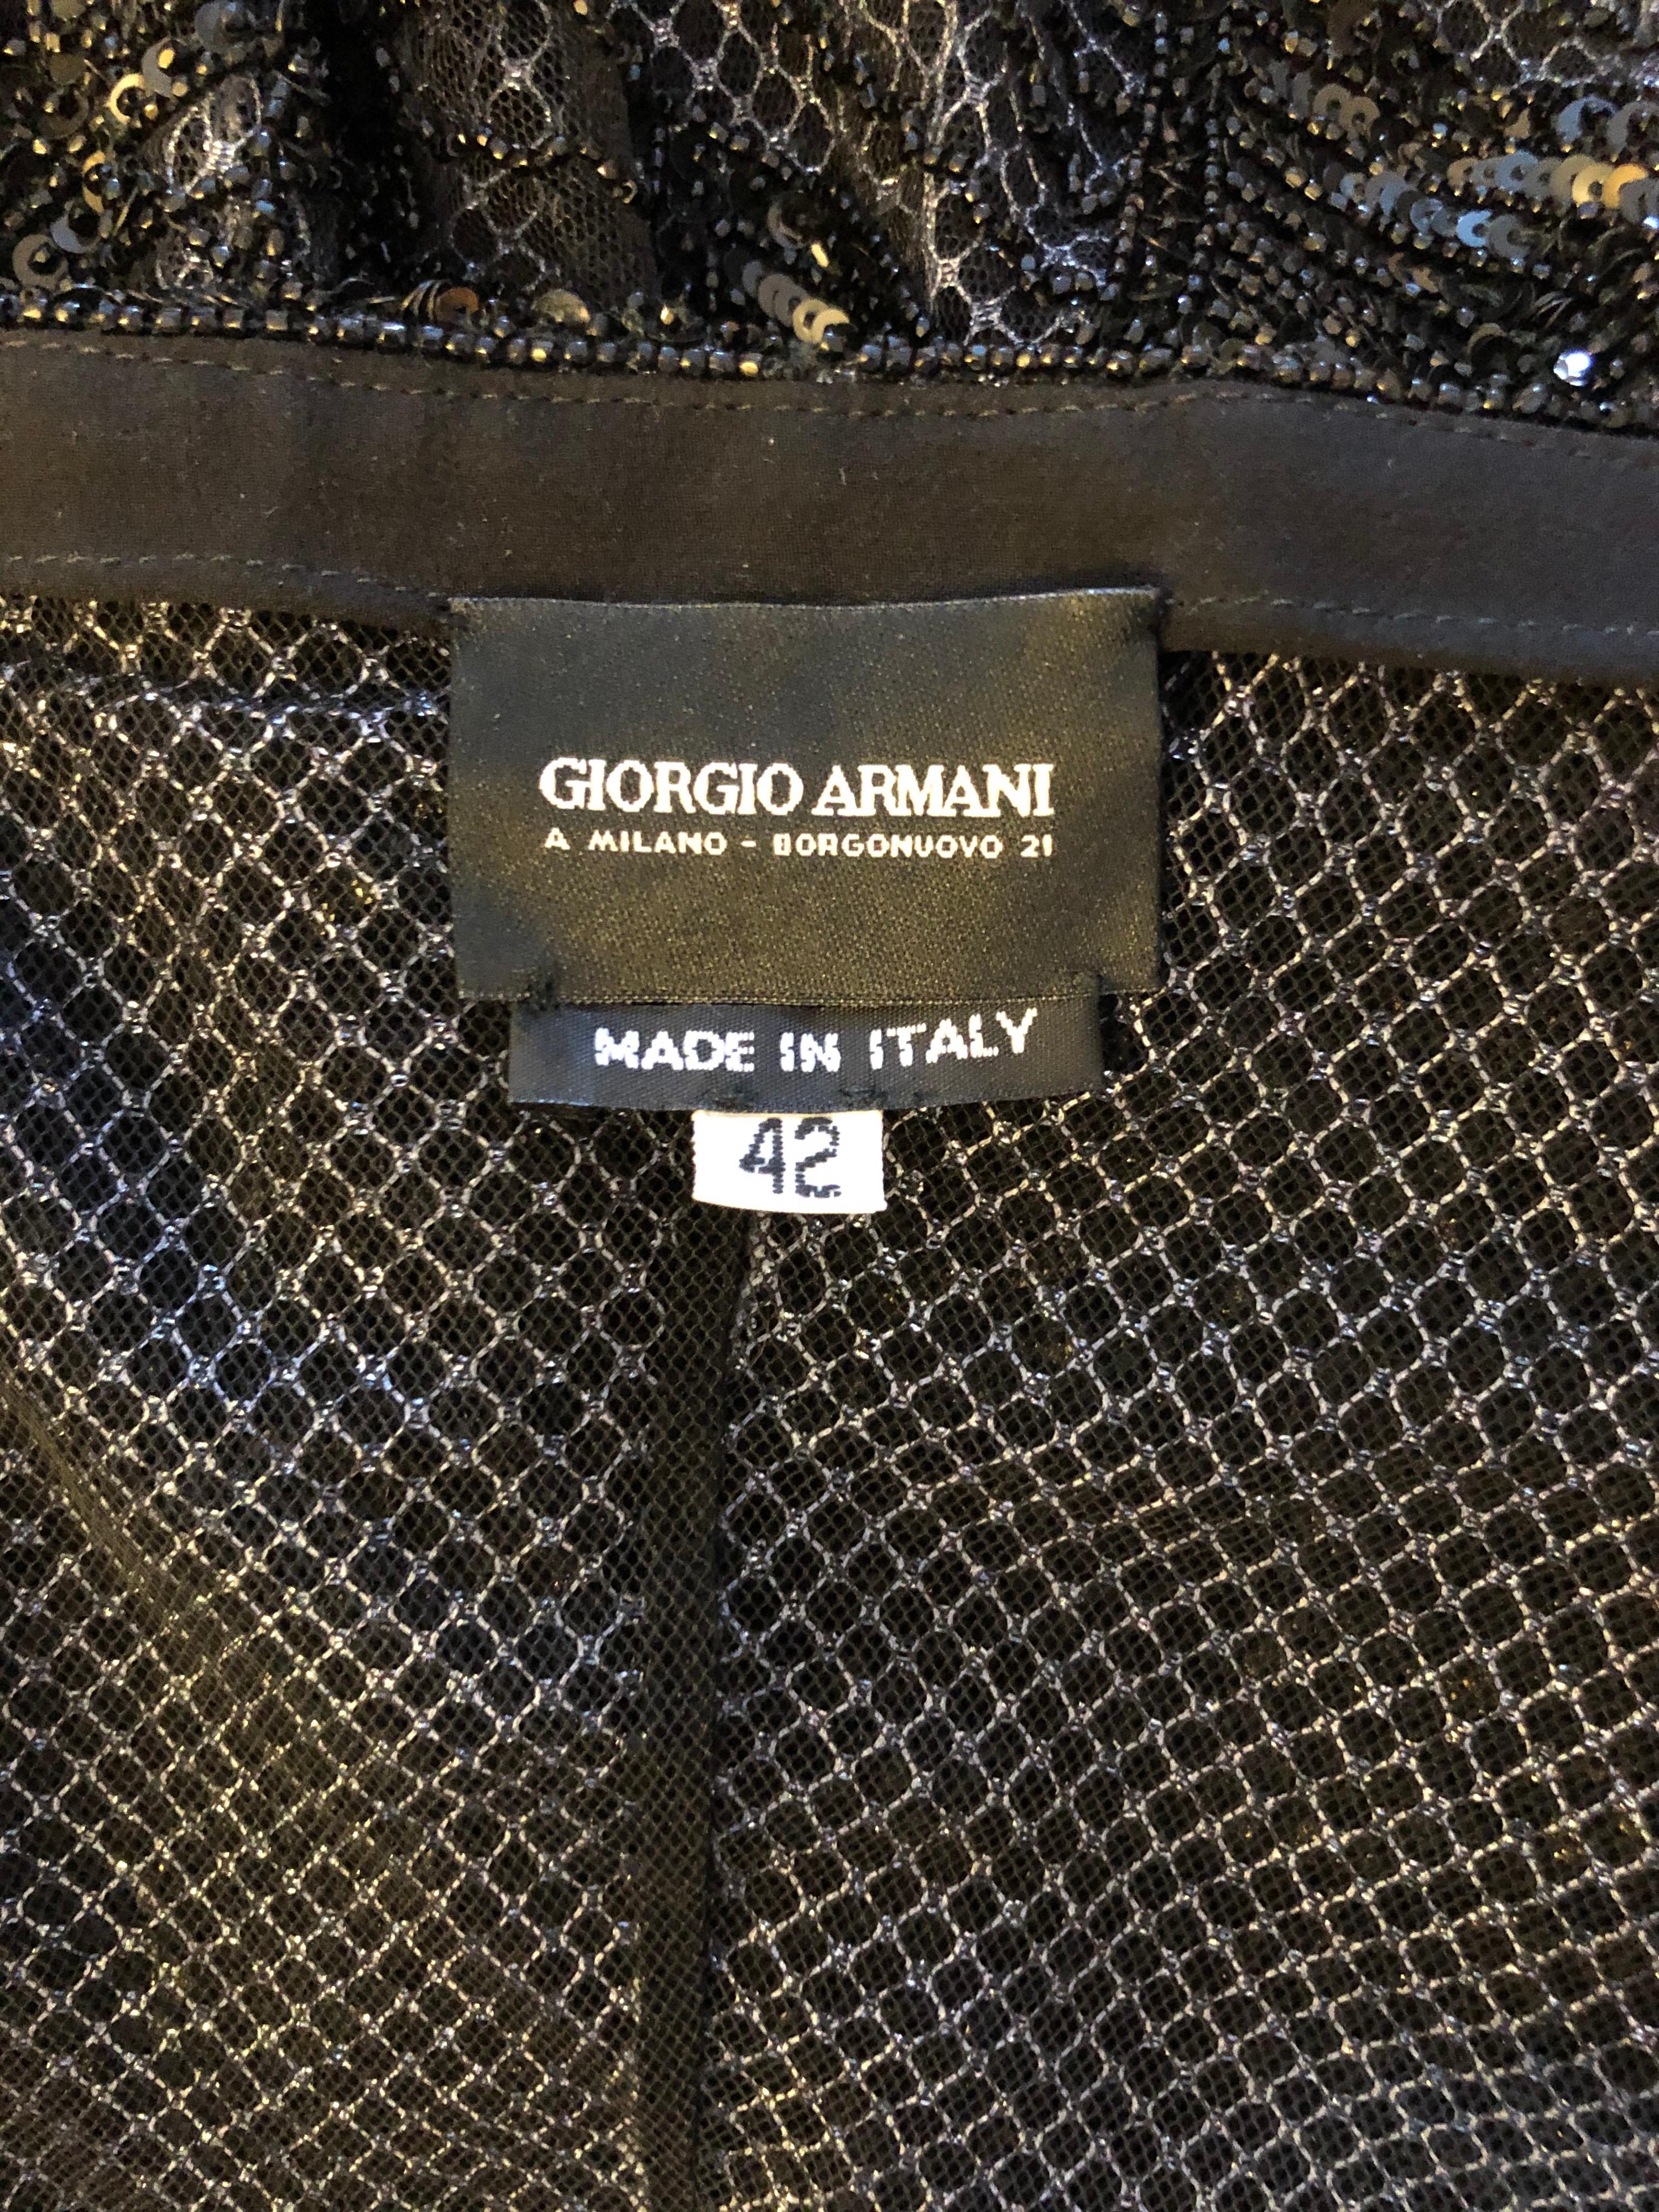 Giorgio Armani F/W 1999 Runway Vintage Embellished Sheer Mesh Black Dress Gown For Sale 1